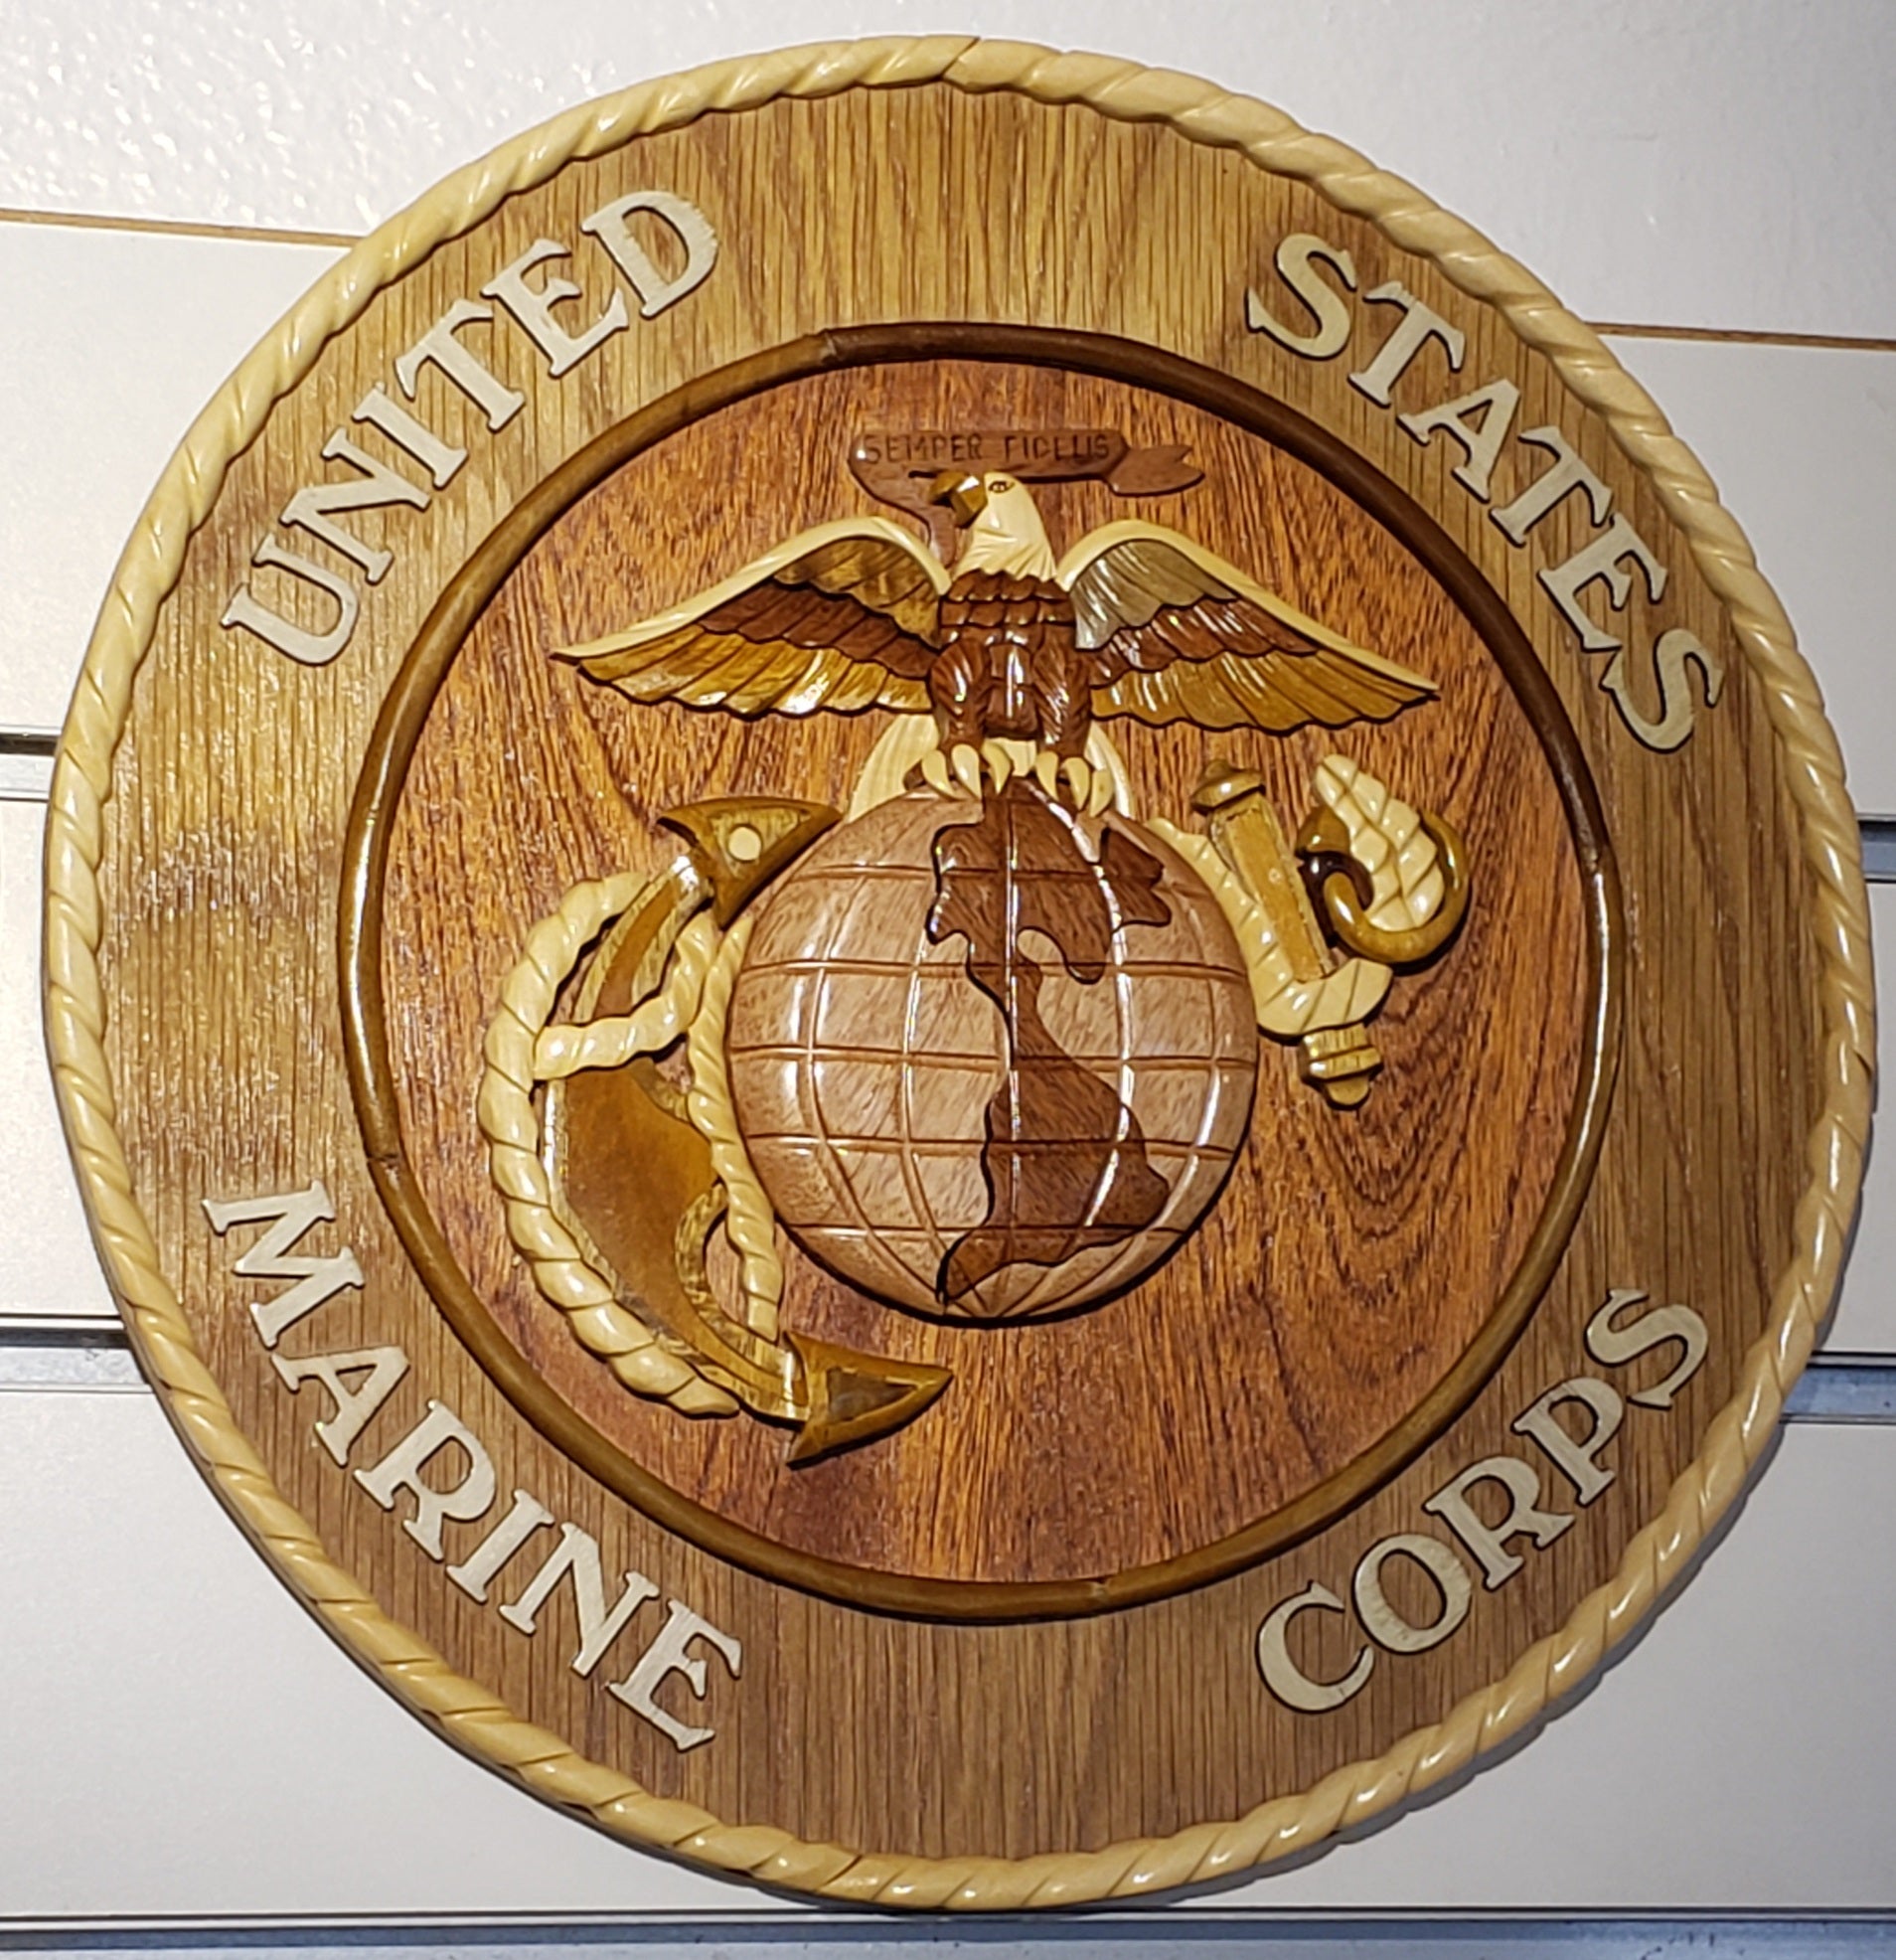 Marine Corp Wood Inlay Wall Hanging 13"